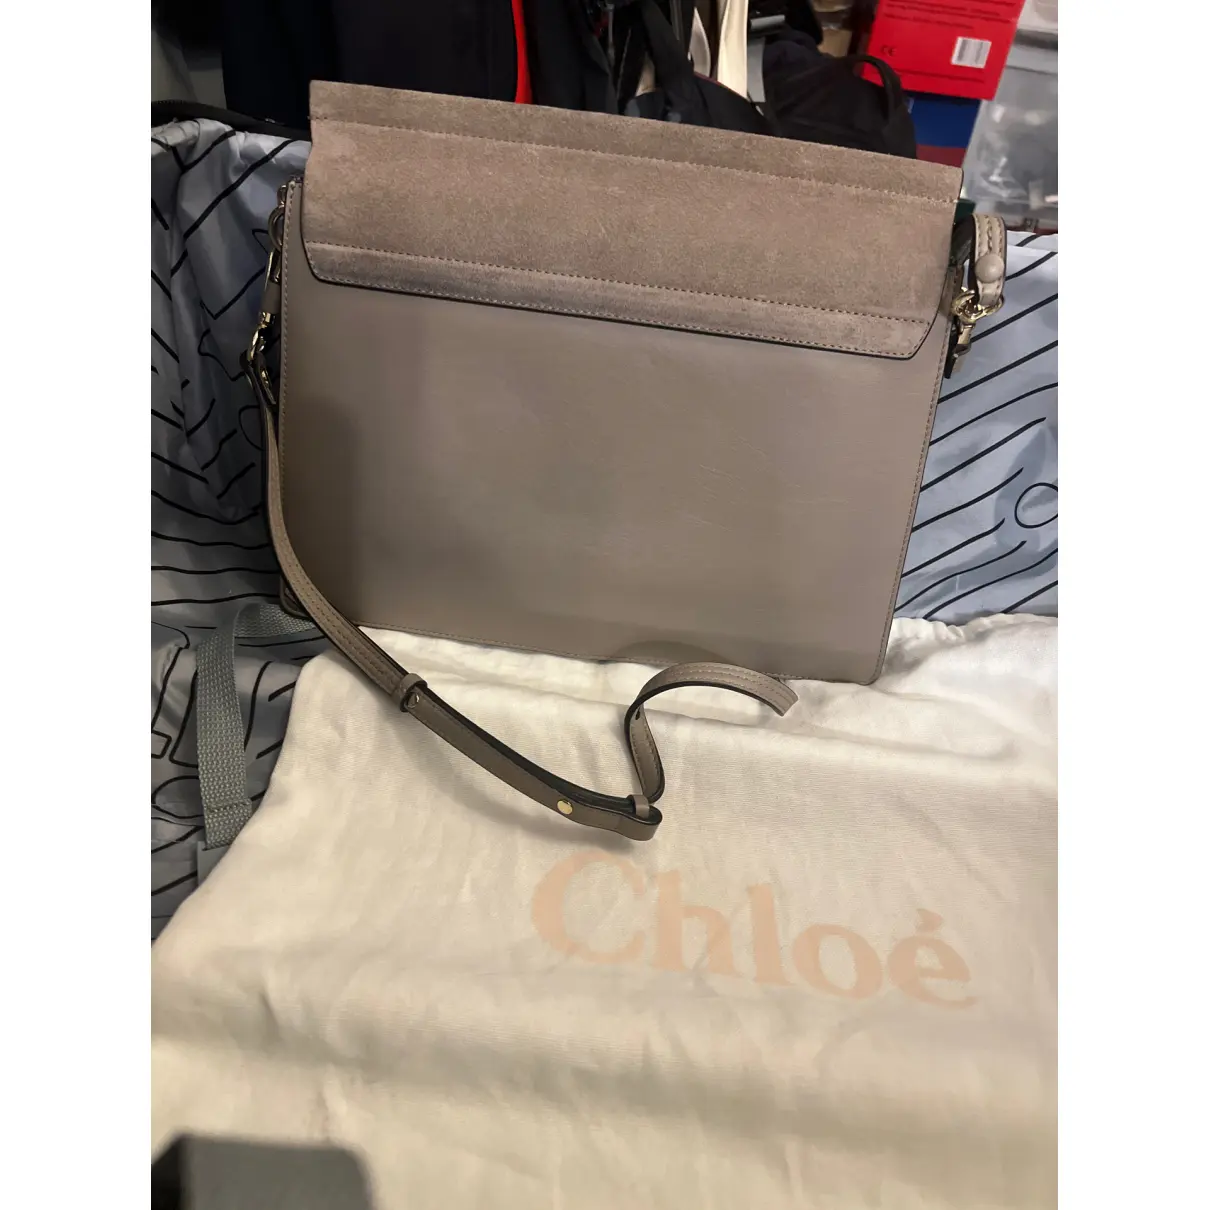 Buy Chloé Faye leather handbag online